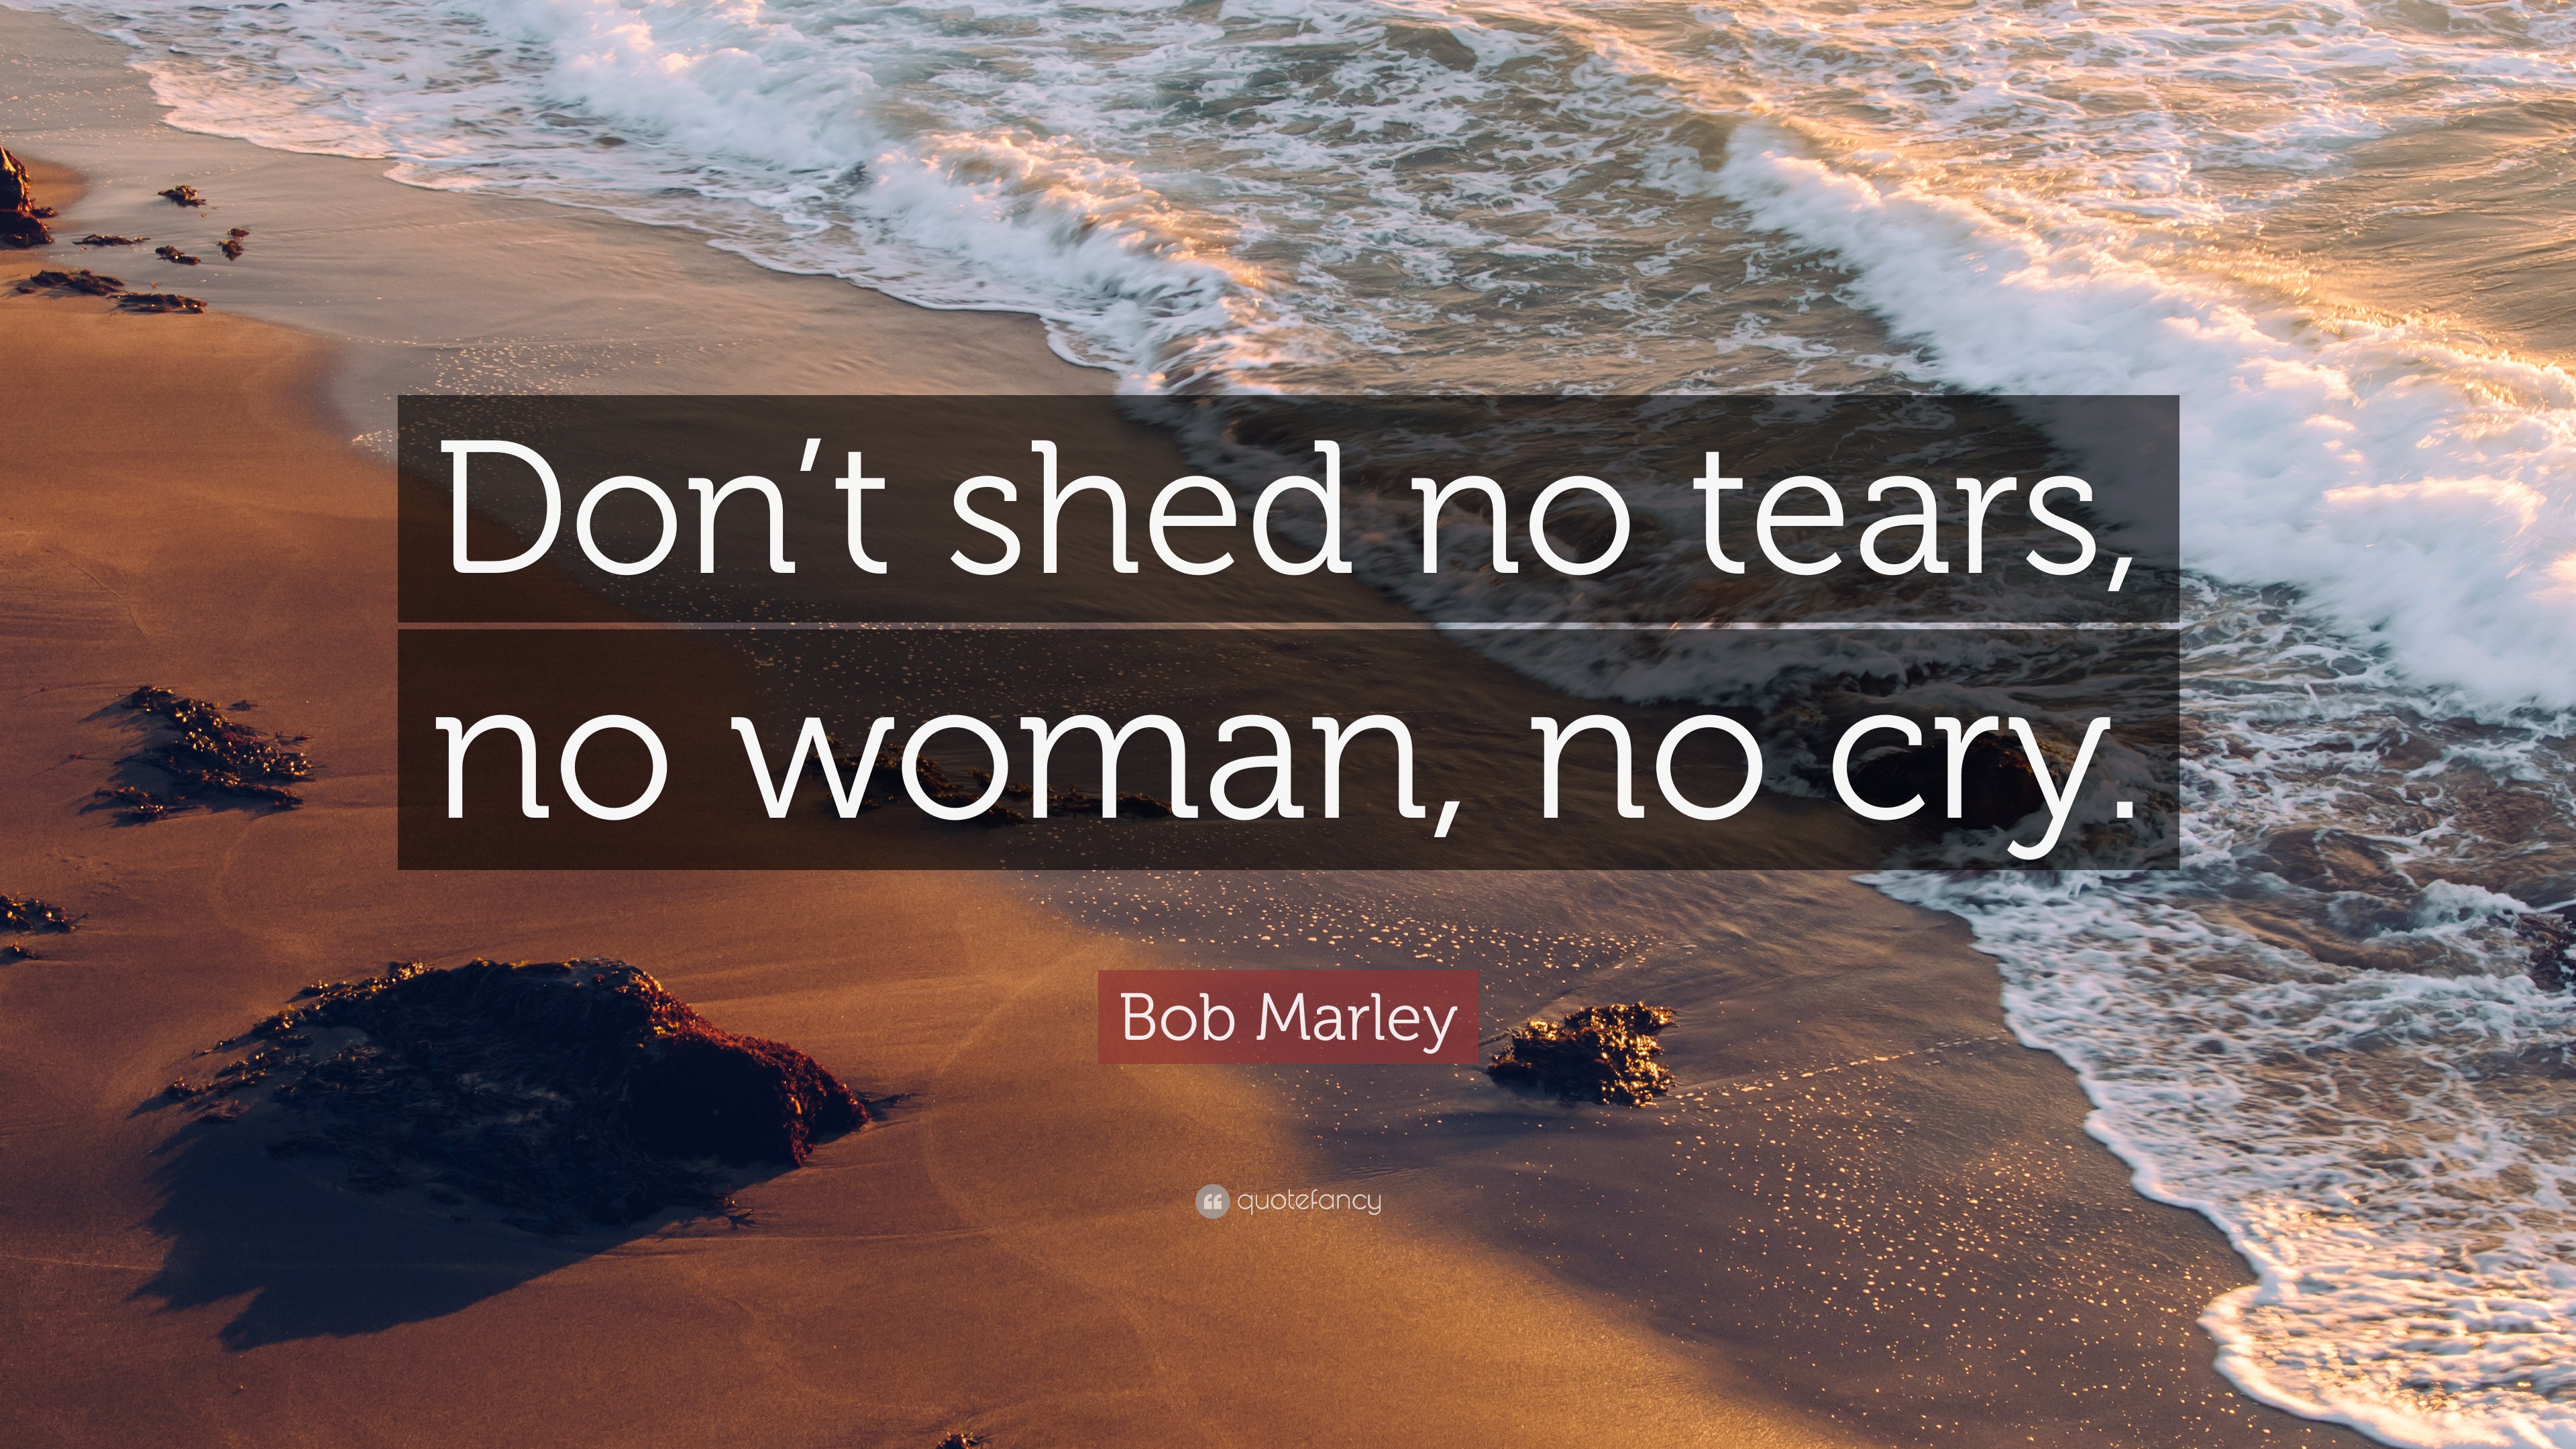 Bob Marley Quote: “Don't Shed No Tears, No Woman, No Cry.”